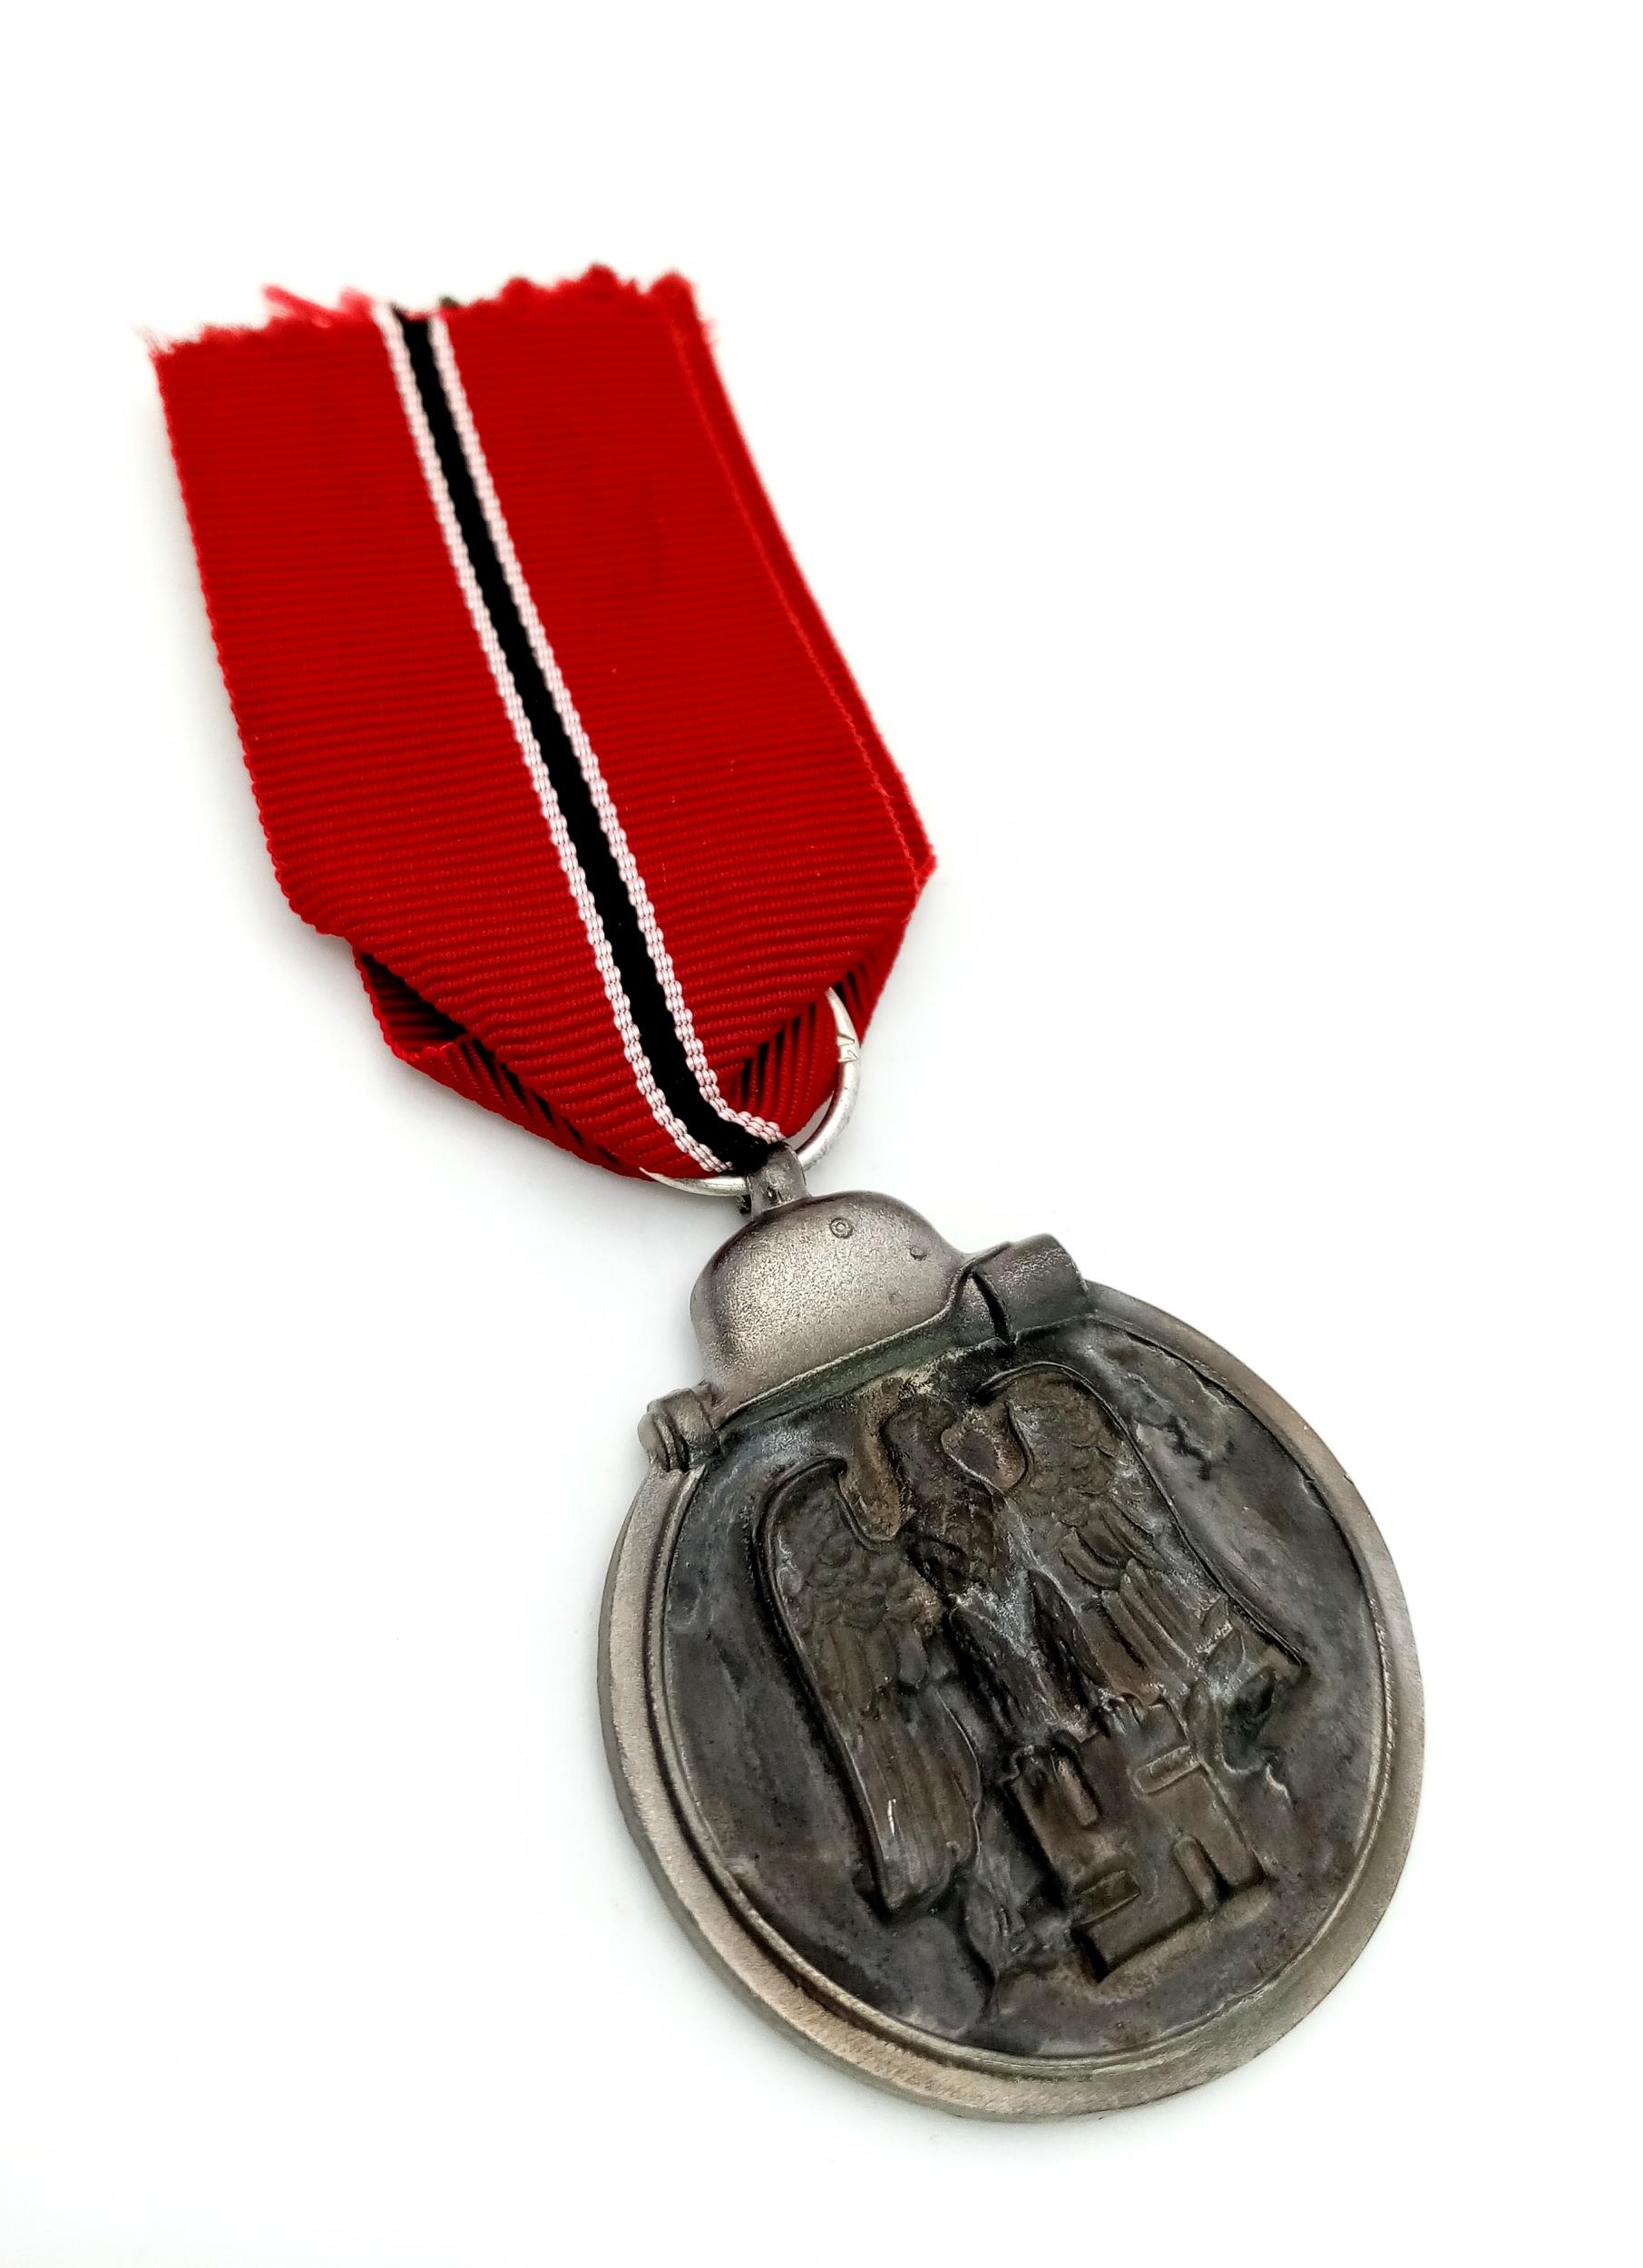 WW2 German Eastern Front Medal. - Image 3 of 3